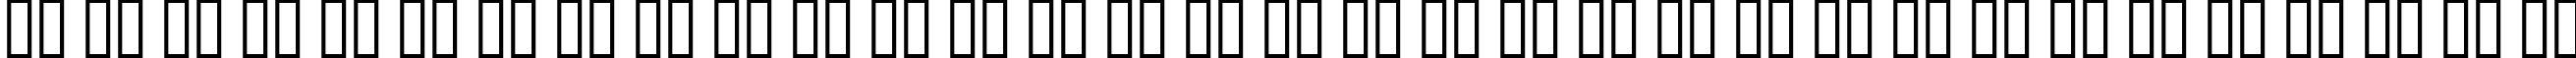 Пример написания русского алфавита шрифтом AnchorSteamNF